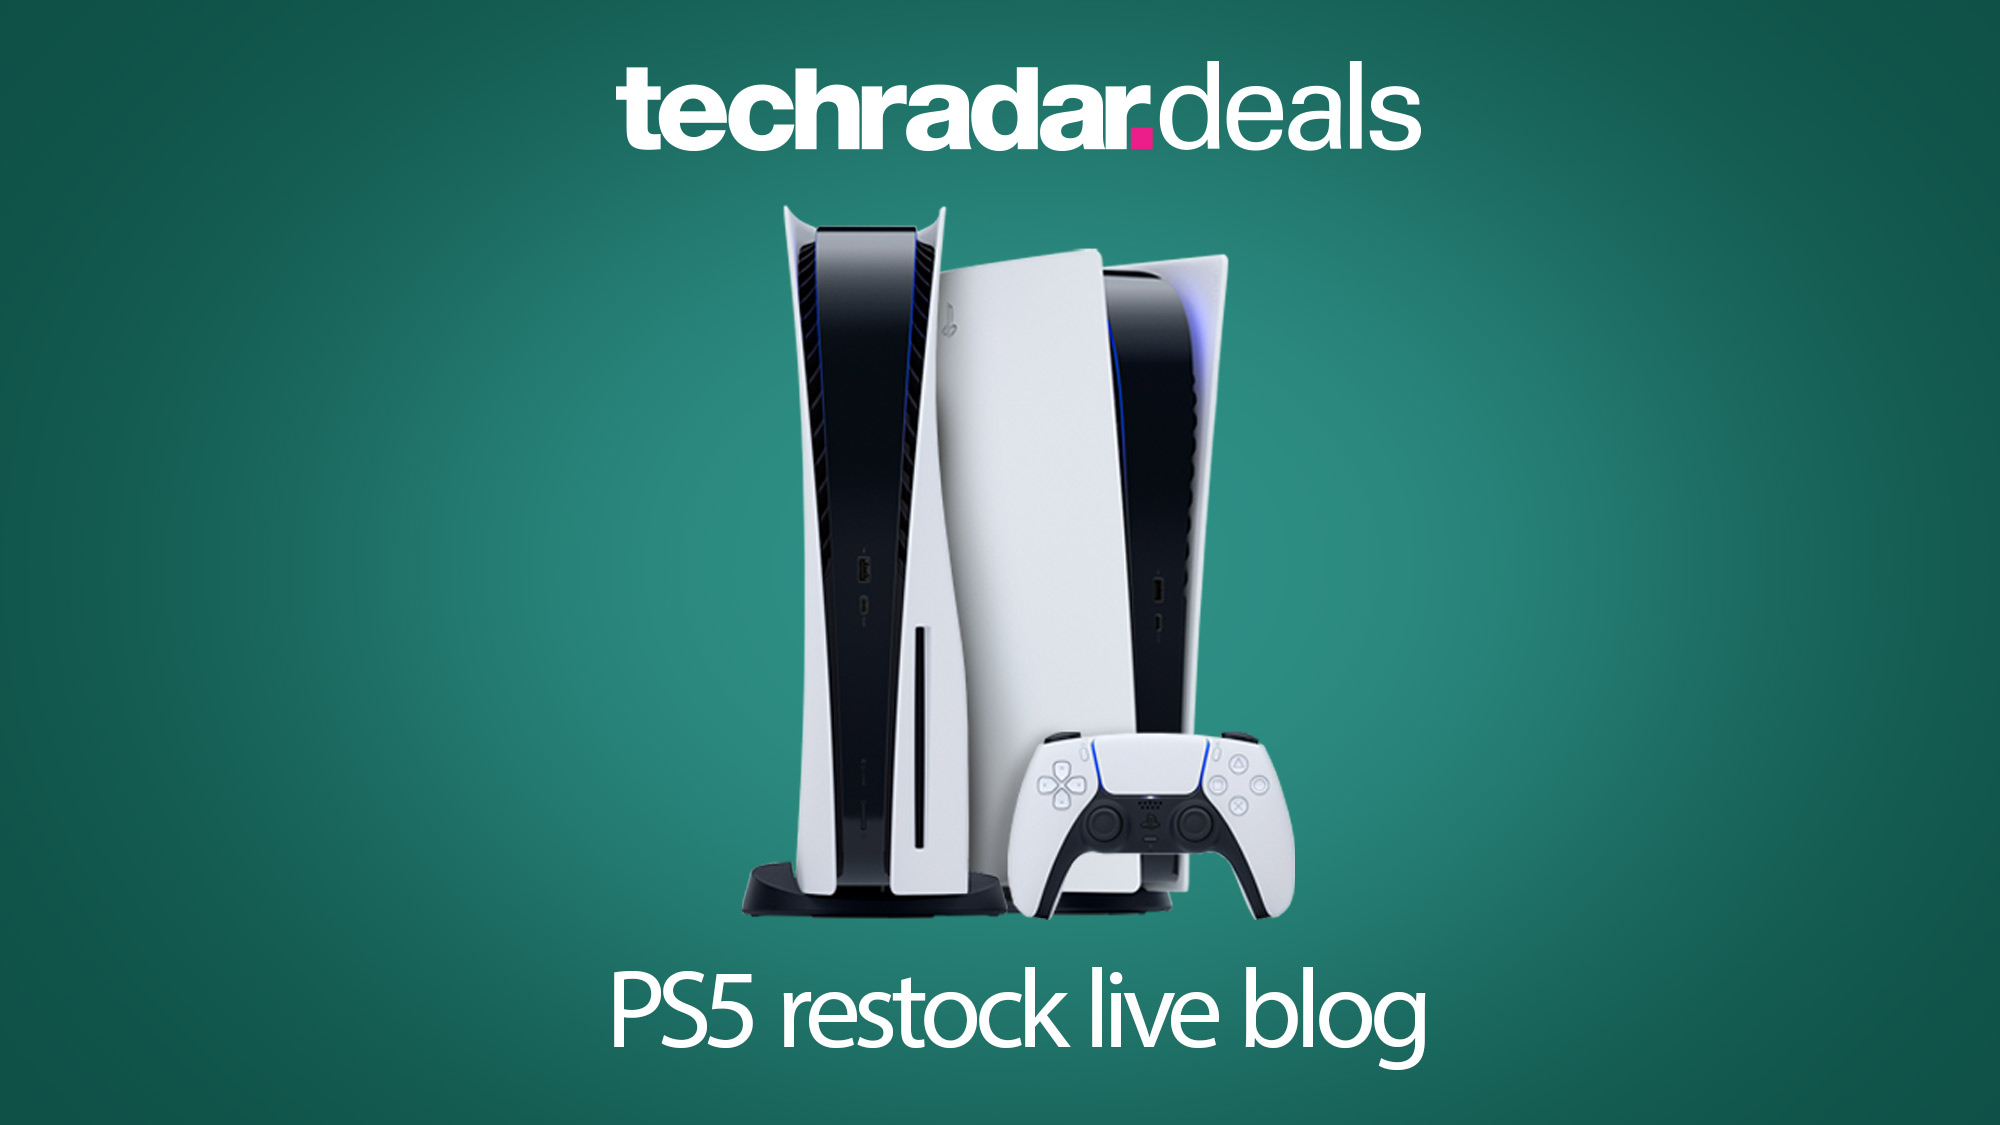 PS5 restock live blog header green